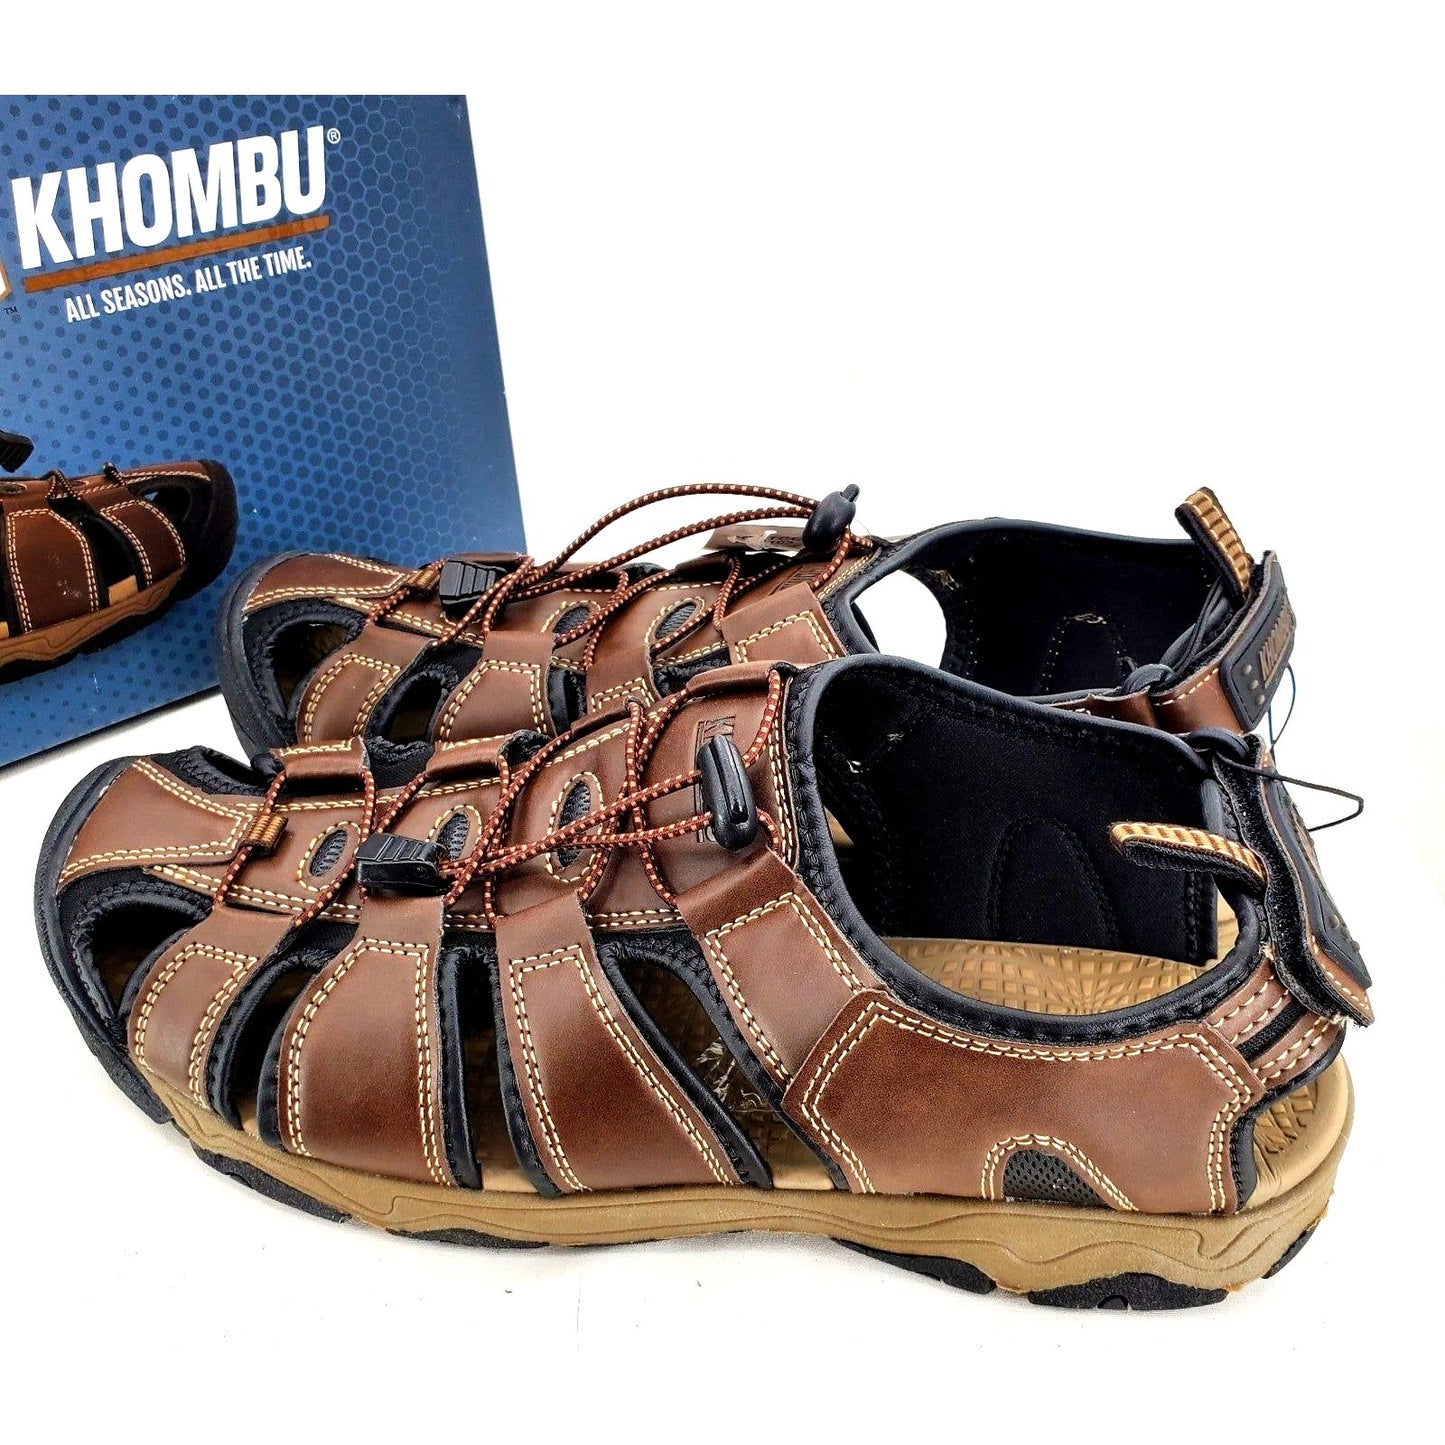 KHOMBU Sandals Men's Hal Outdoor Fisherman Waterproof all-terrain Hiking shoes